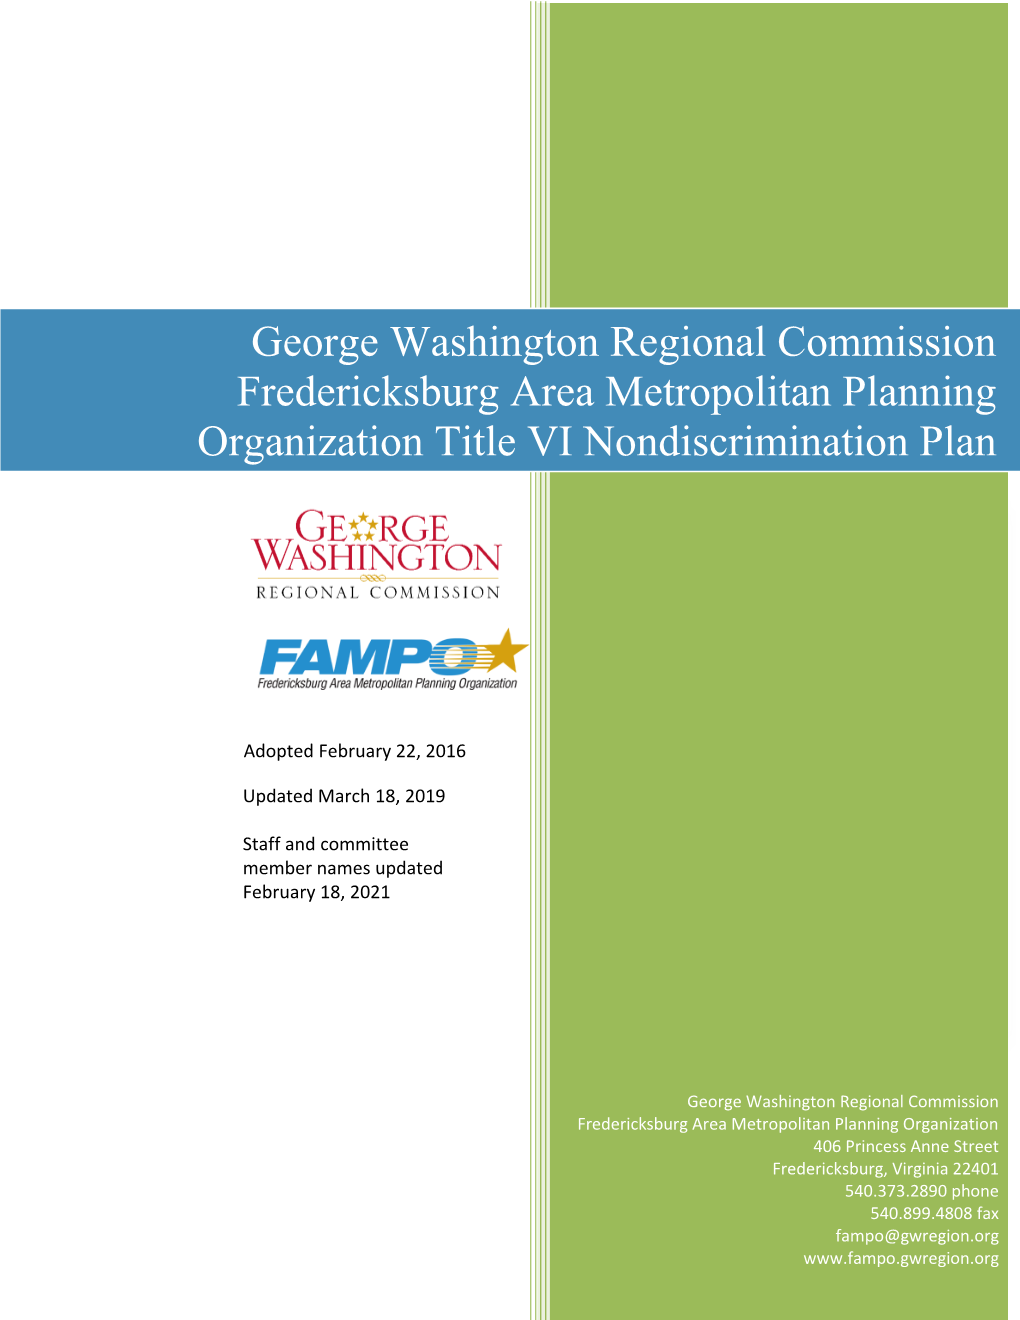 George Washington Regional Commission Fredericksburg Area Metropolitan Planning Organization Title VI Nondiscrimination Plan